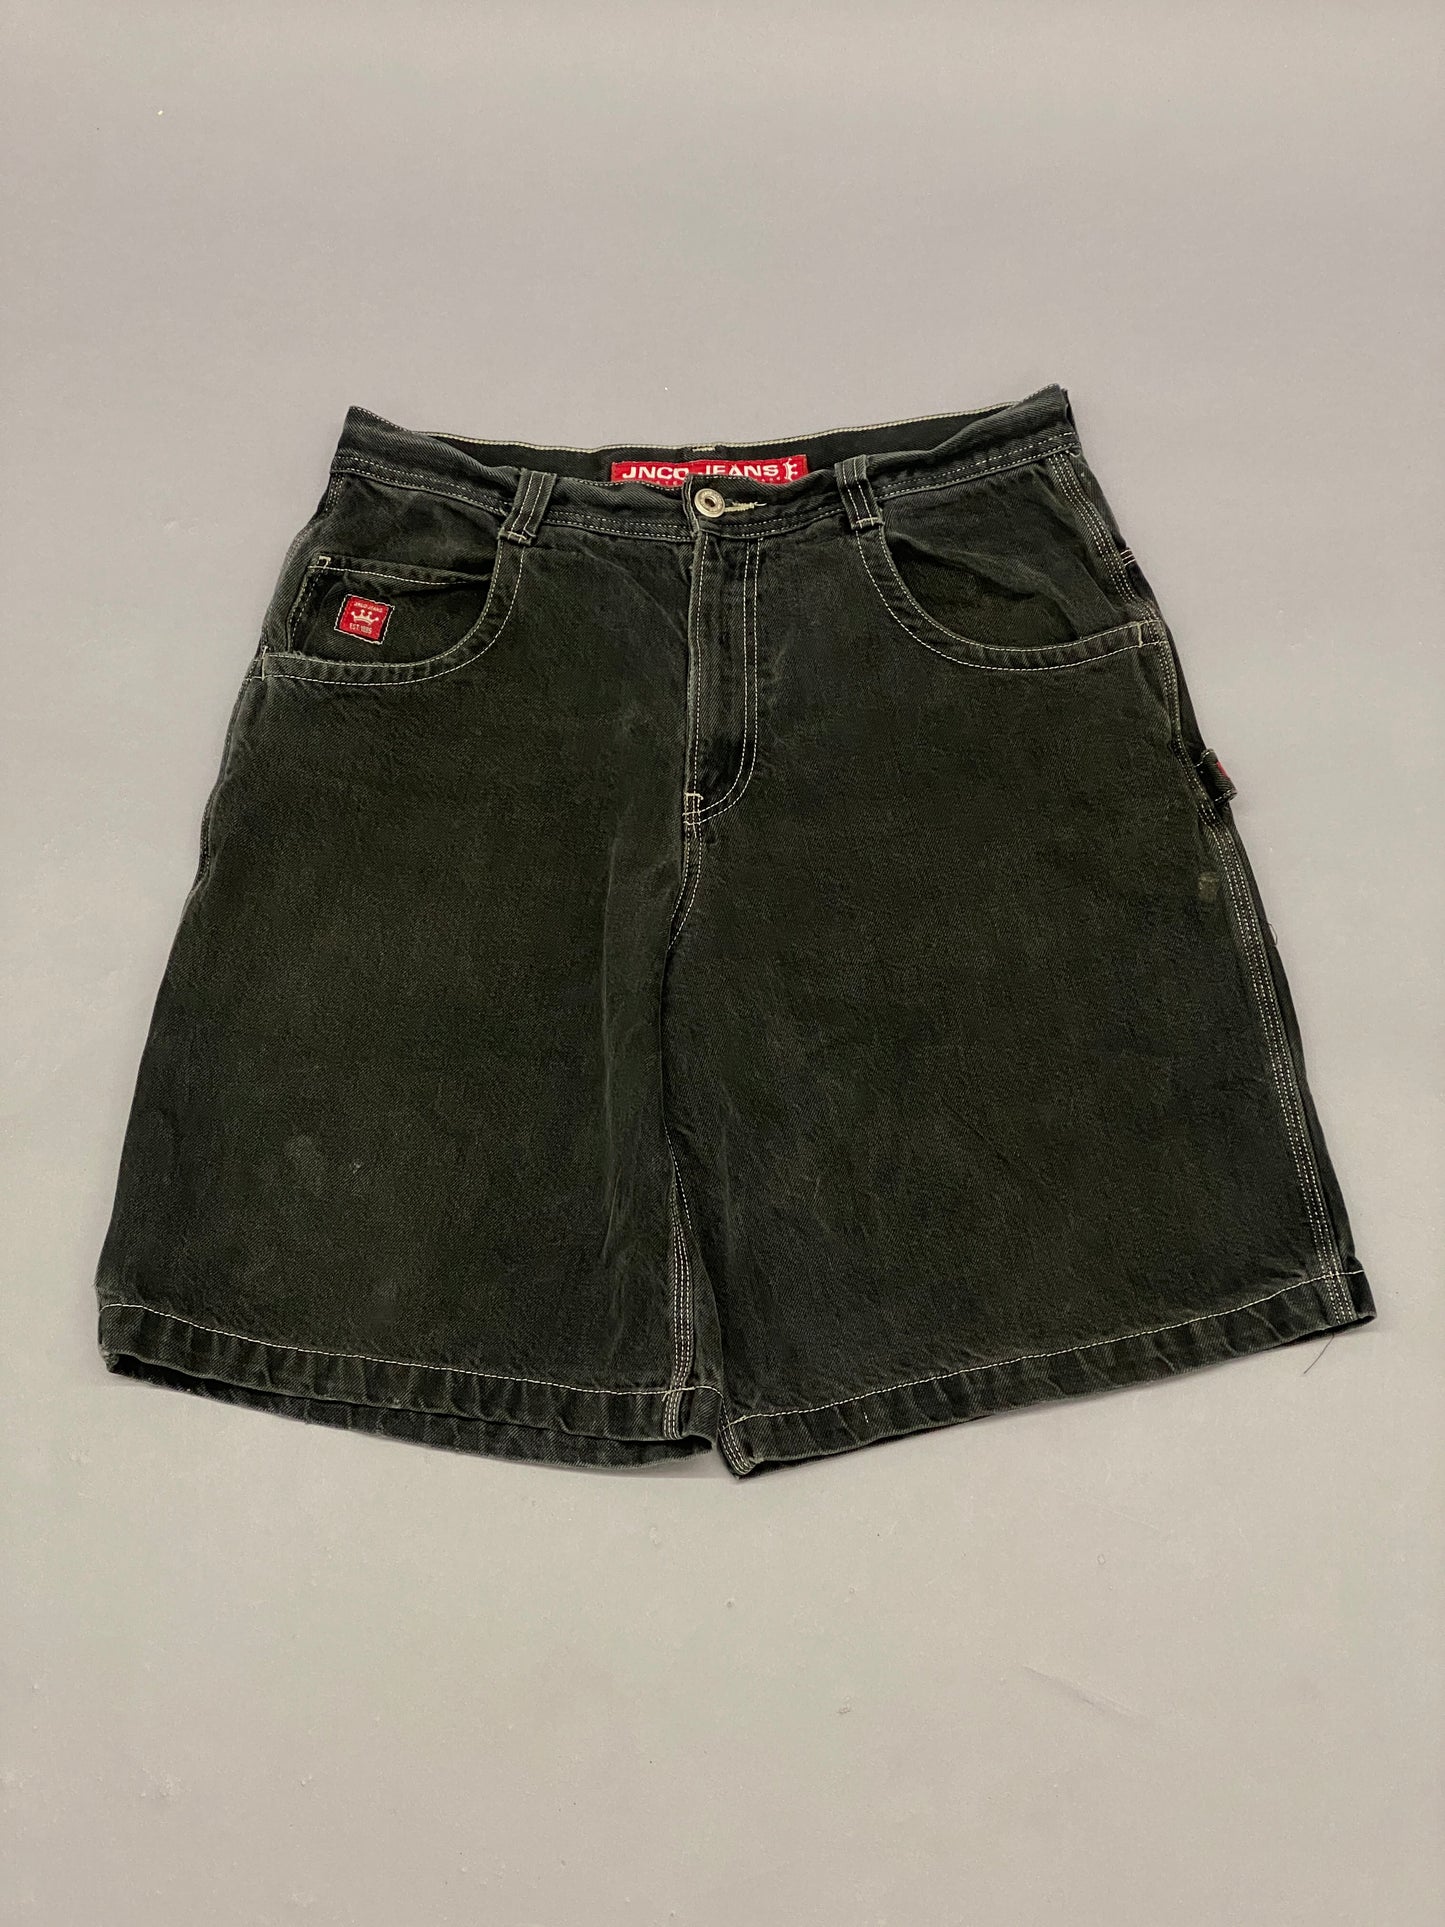 JNCO Crown Vintage Shorts - 34